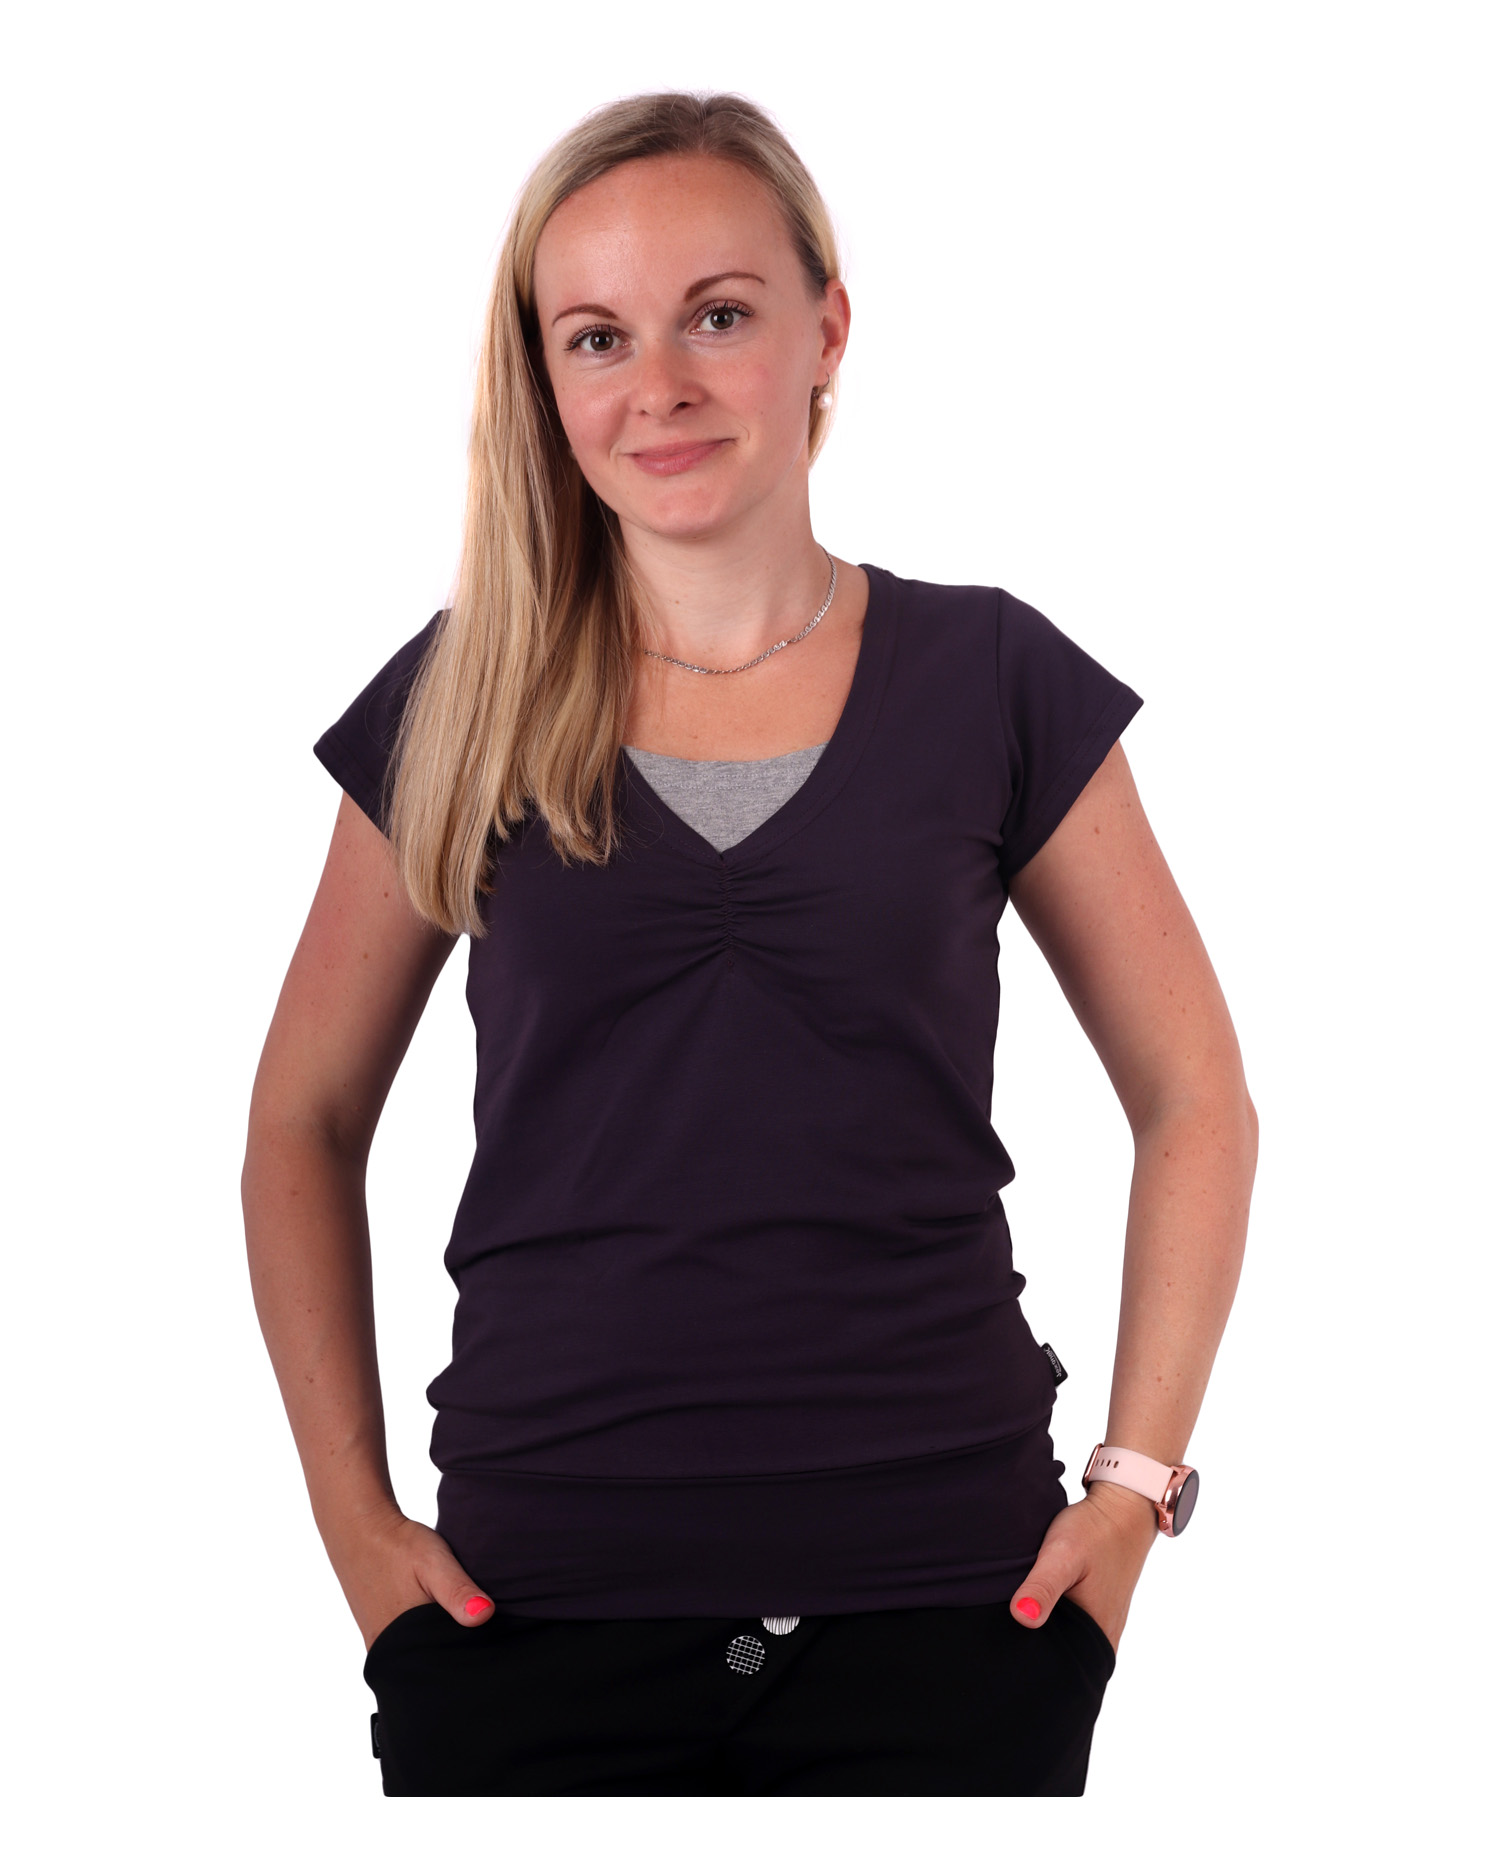 Breast-feeding T-shirt Lea, short sleeves, plum